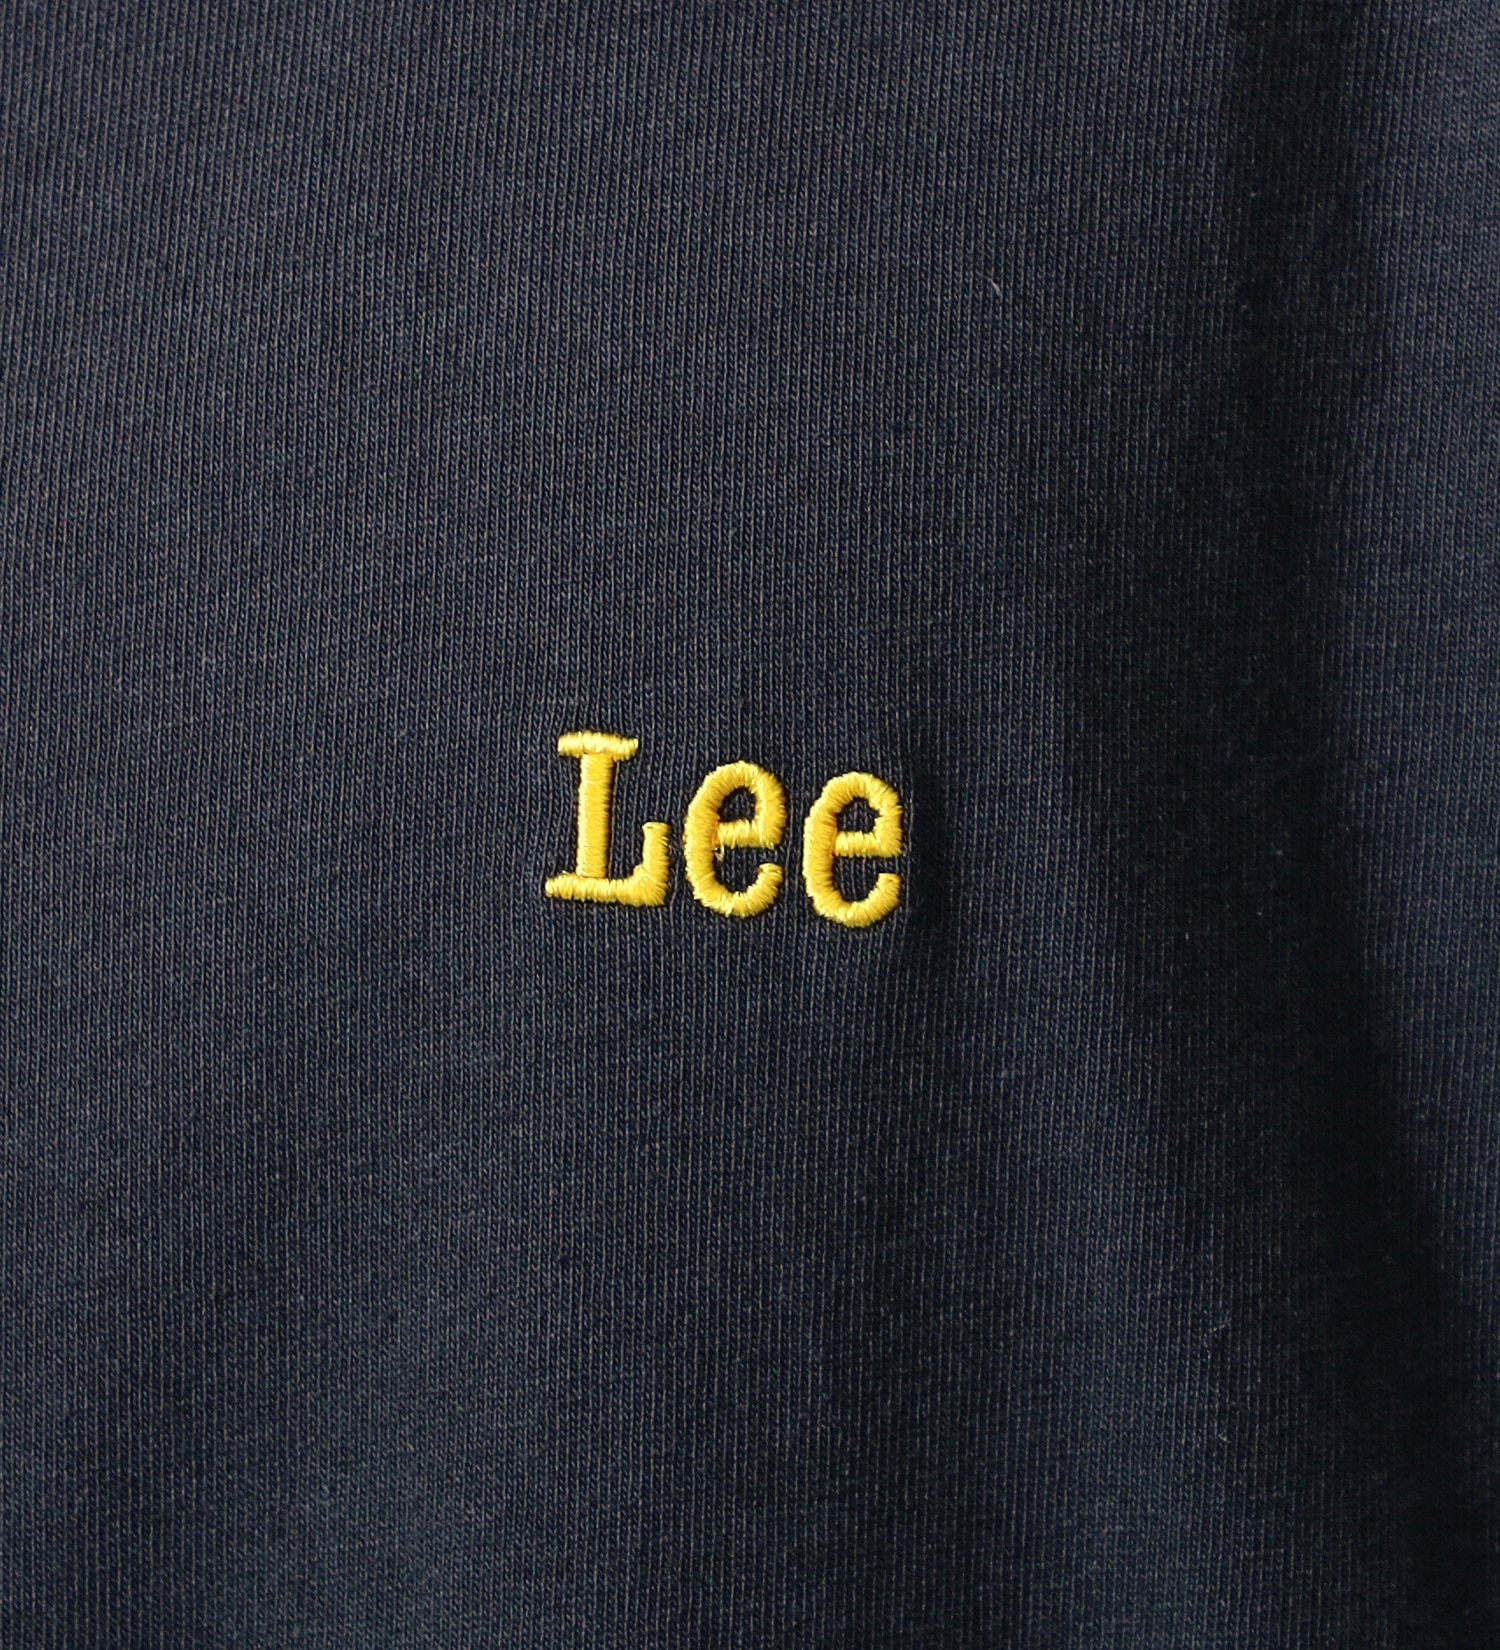 Lee(リー)の【GW SALE】バックプリント オールドアド ネオン ショートスリーブTee|トップス/Tシャツ/カットソー/メンズ|チャコール